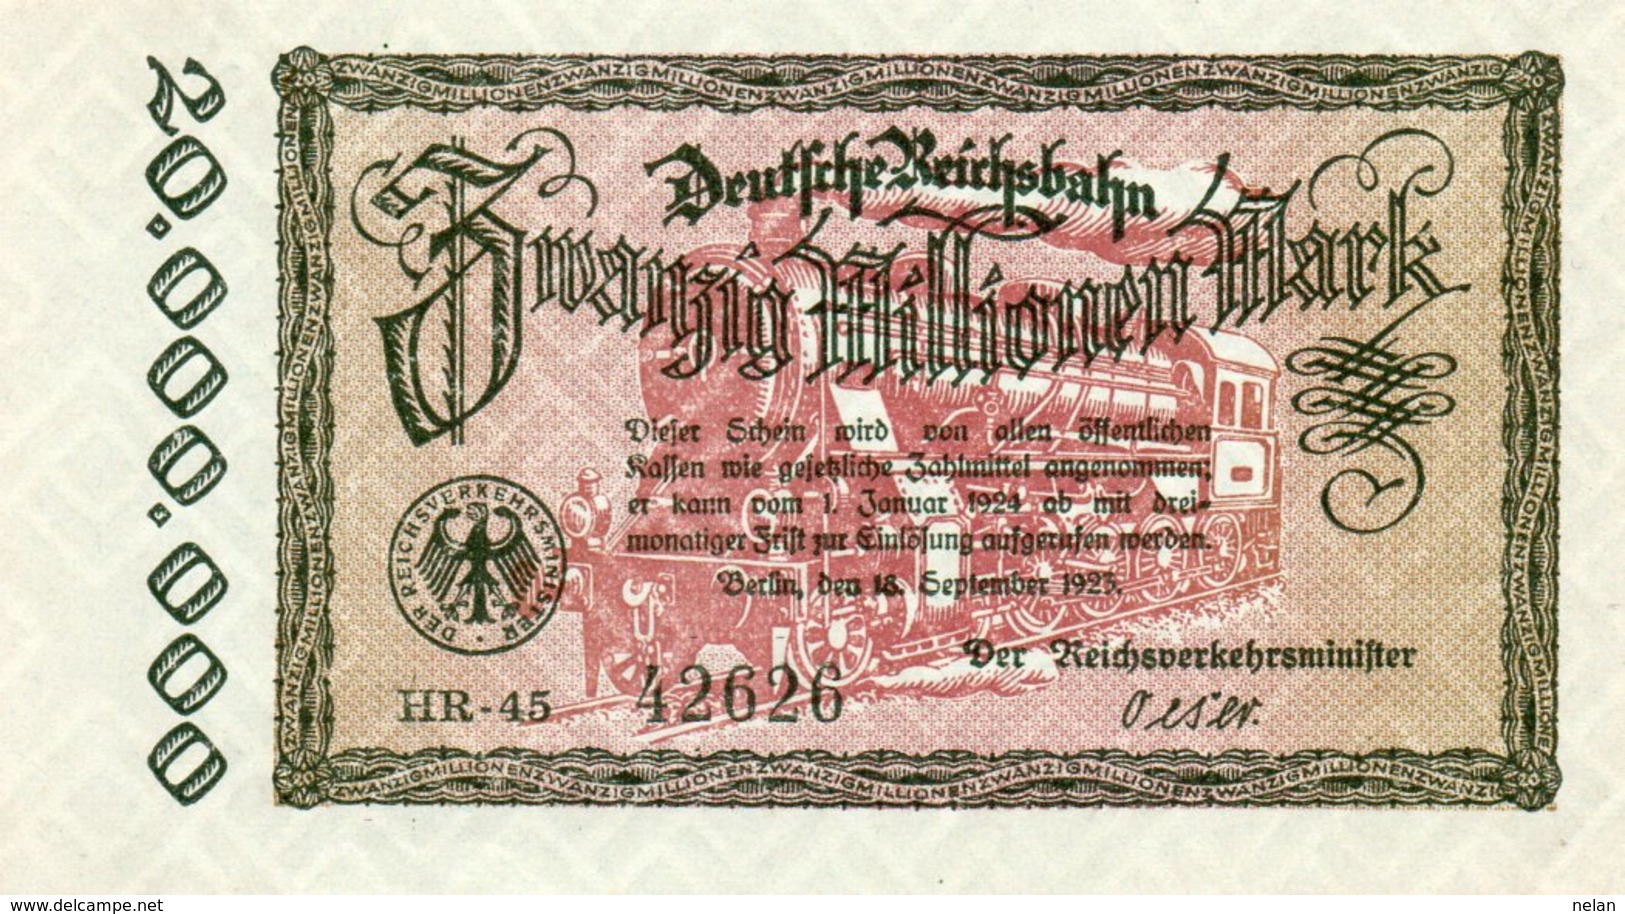 GERMANY-20 MILLIONEN MARK 1923  P-S1015.3  UNC  UNIFACE  SERIE HR-45  42626 - 20 Mio. Mark